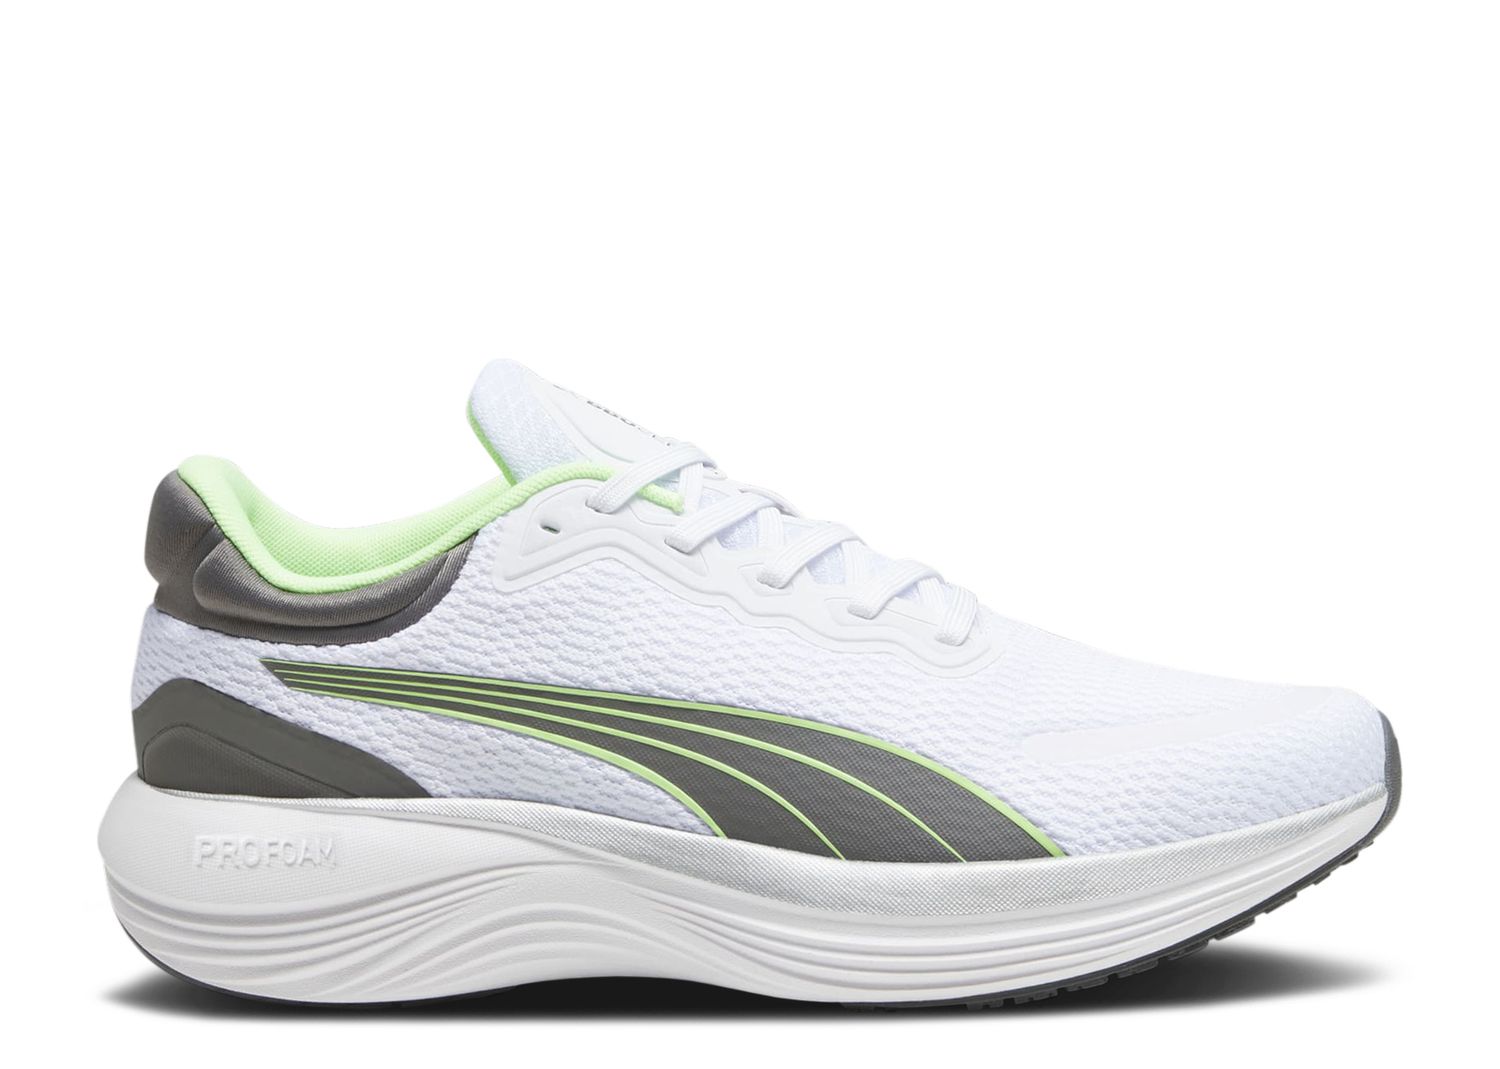 Scend Pro 'White Speed Green Grey' - Puma - 378776 05 - white/speed ...